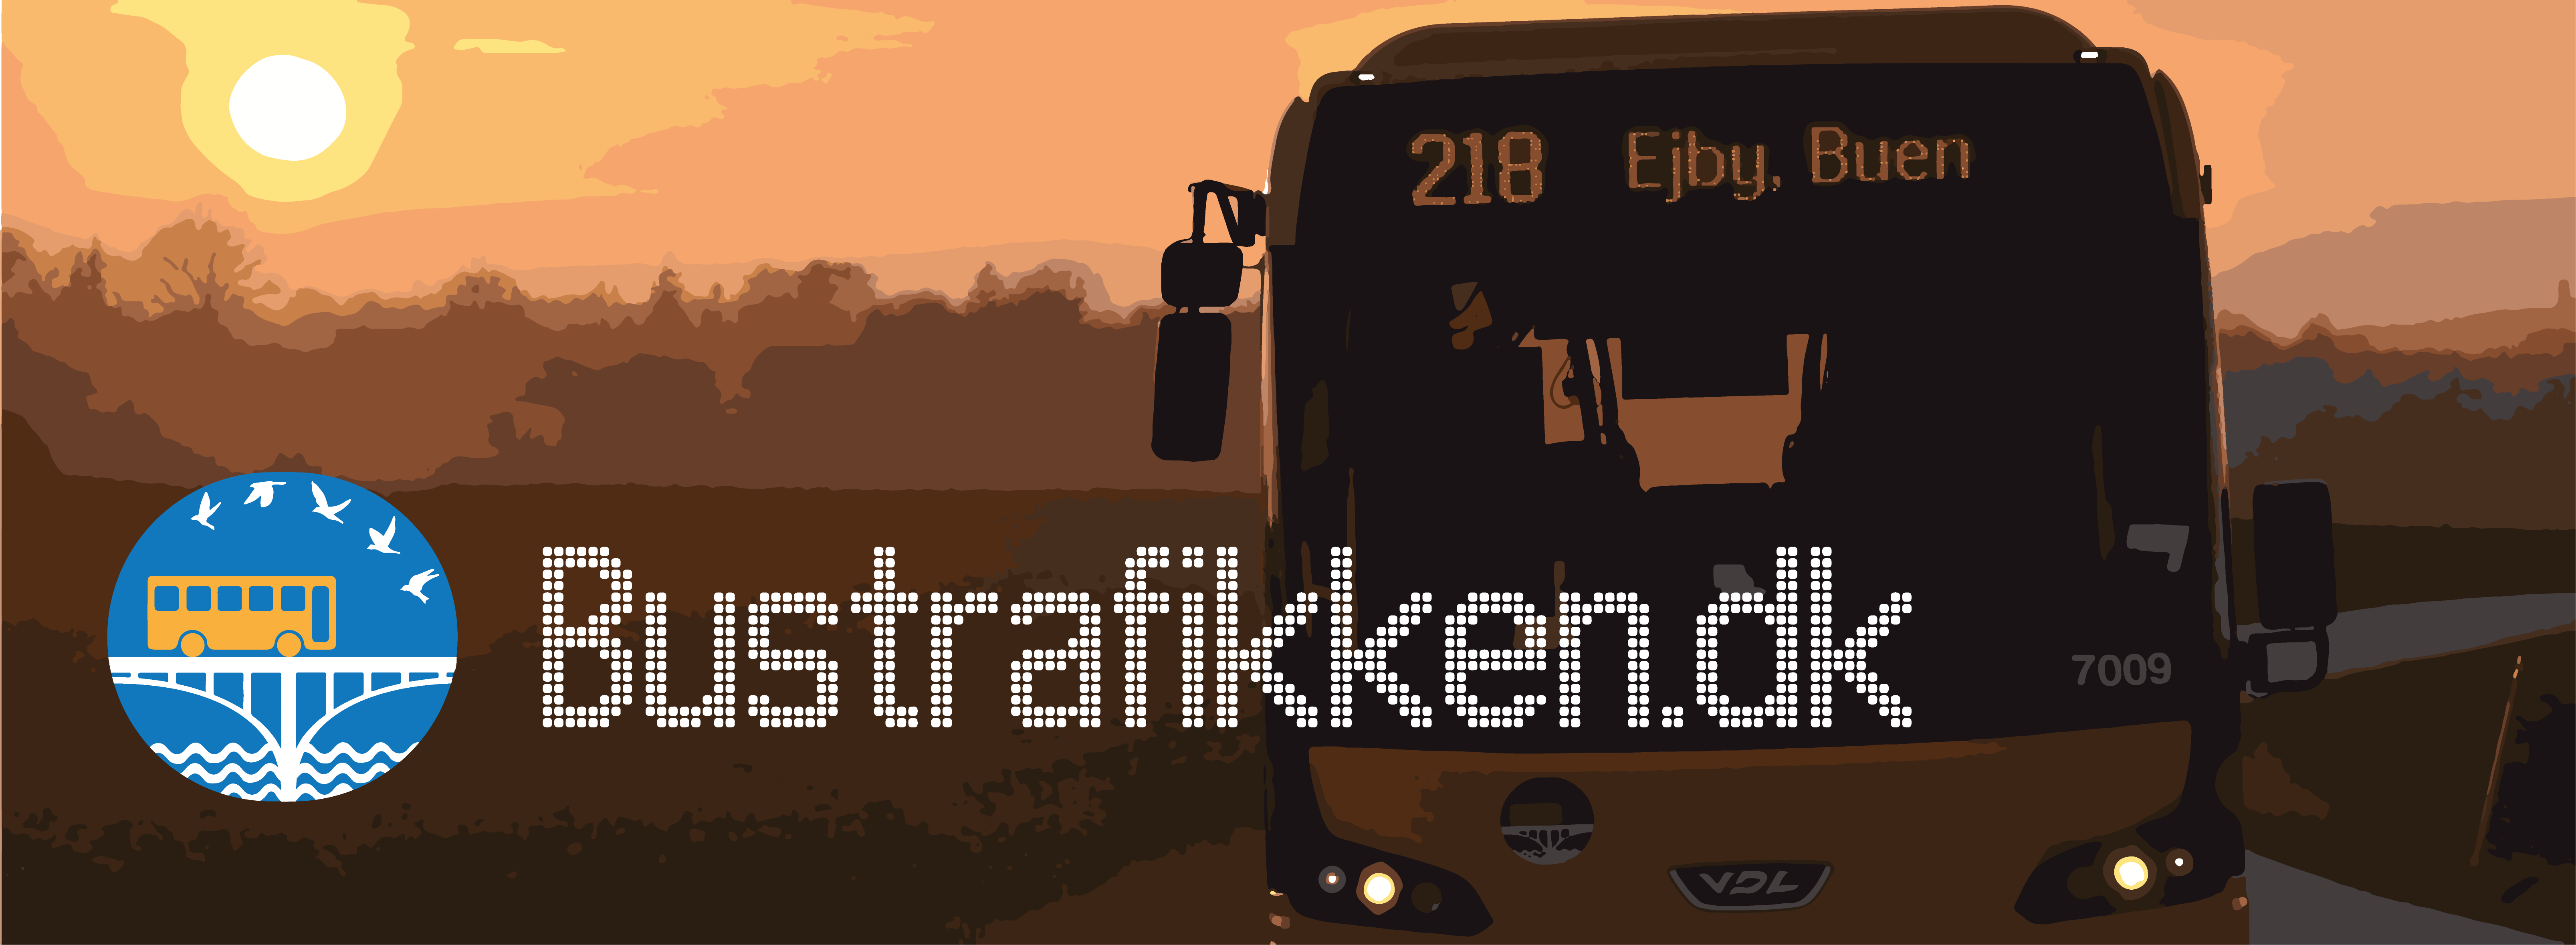 Bustrafikken.dk